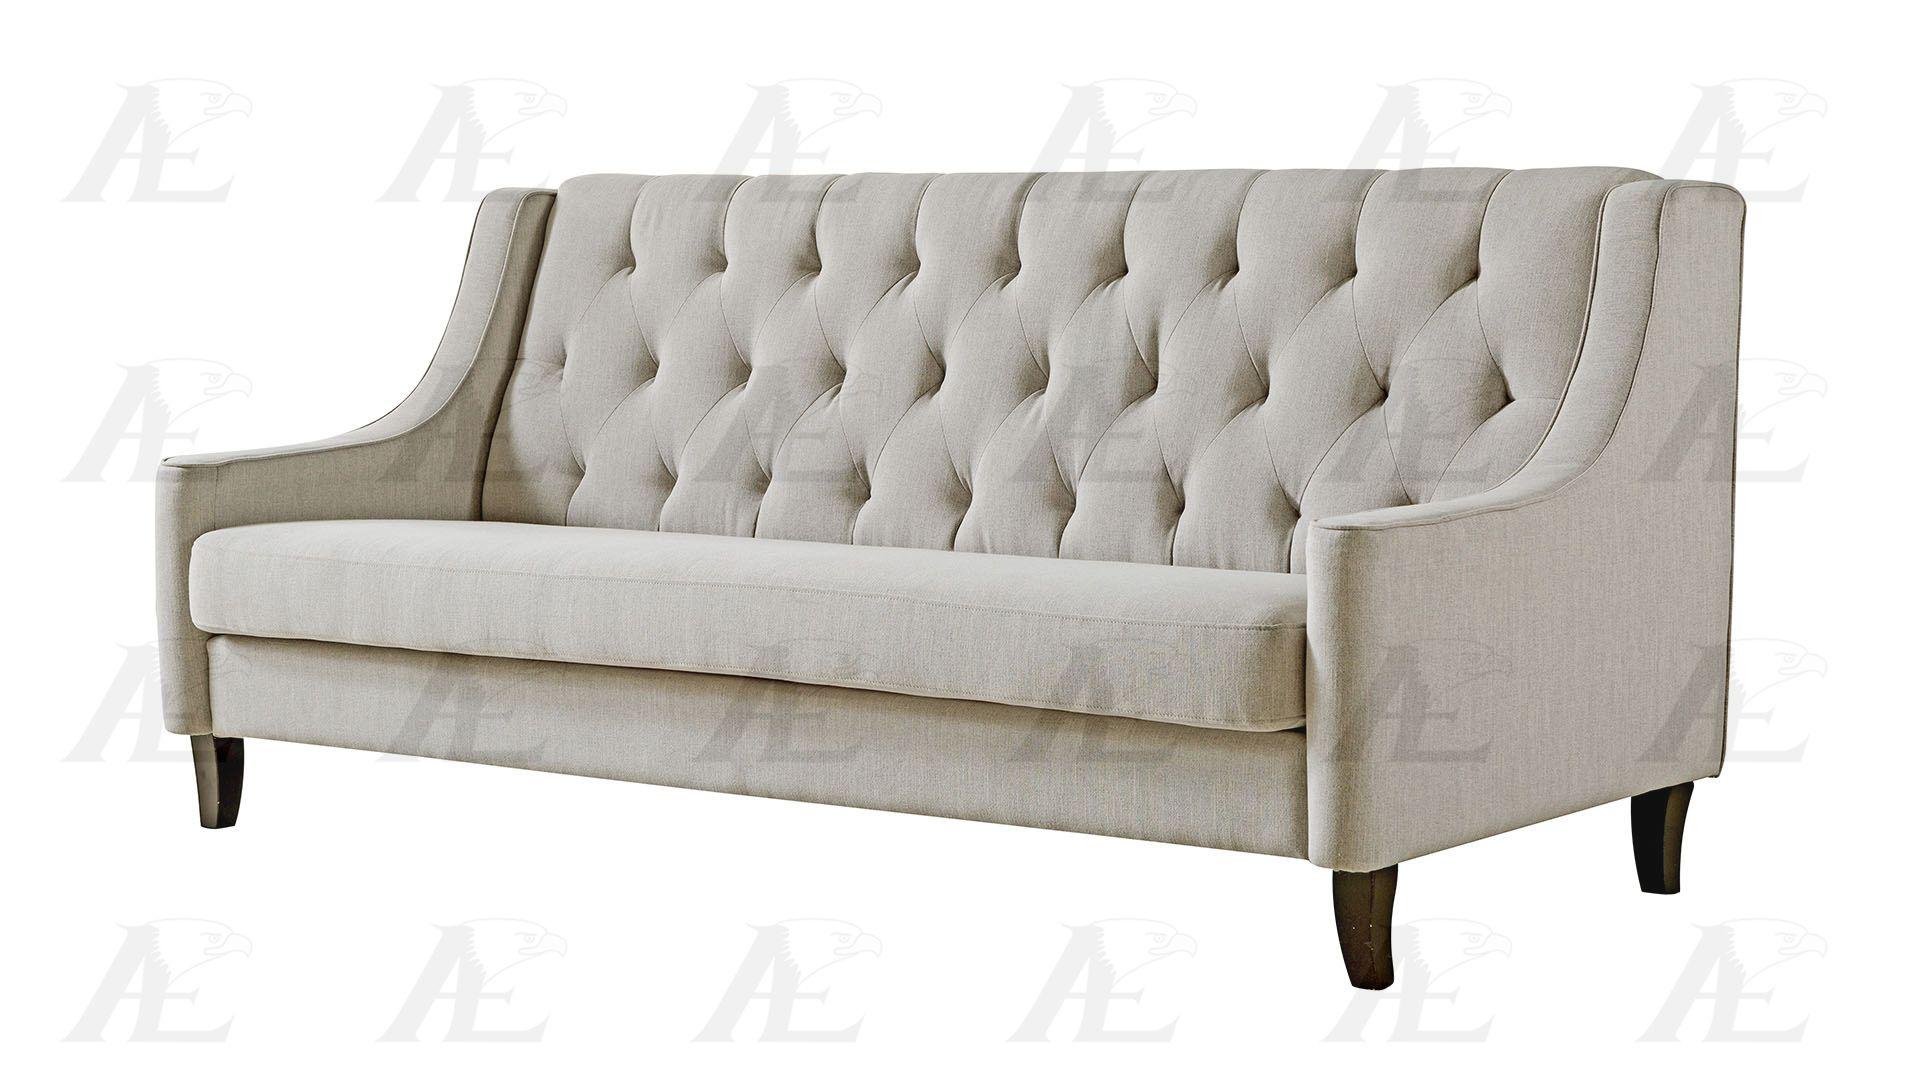 

    
American Eagle Furniture AE2372-LG Sofa and Loveseat Set Light Gray AE2372-LG Set-2
